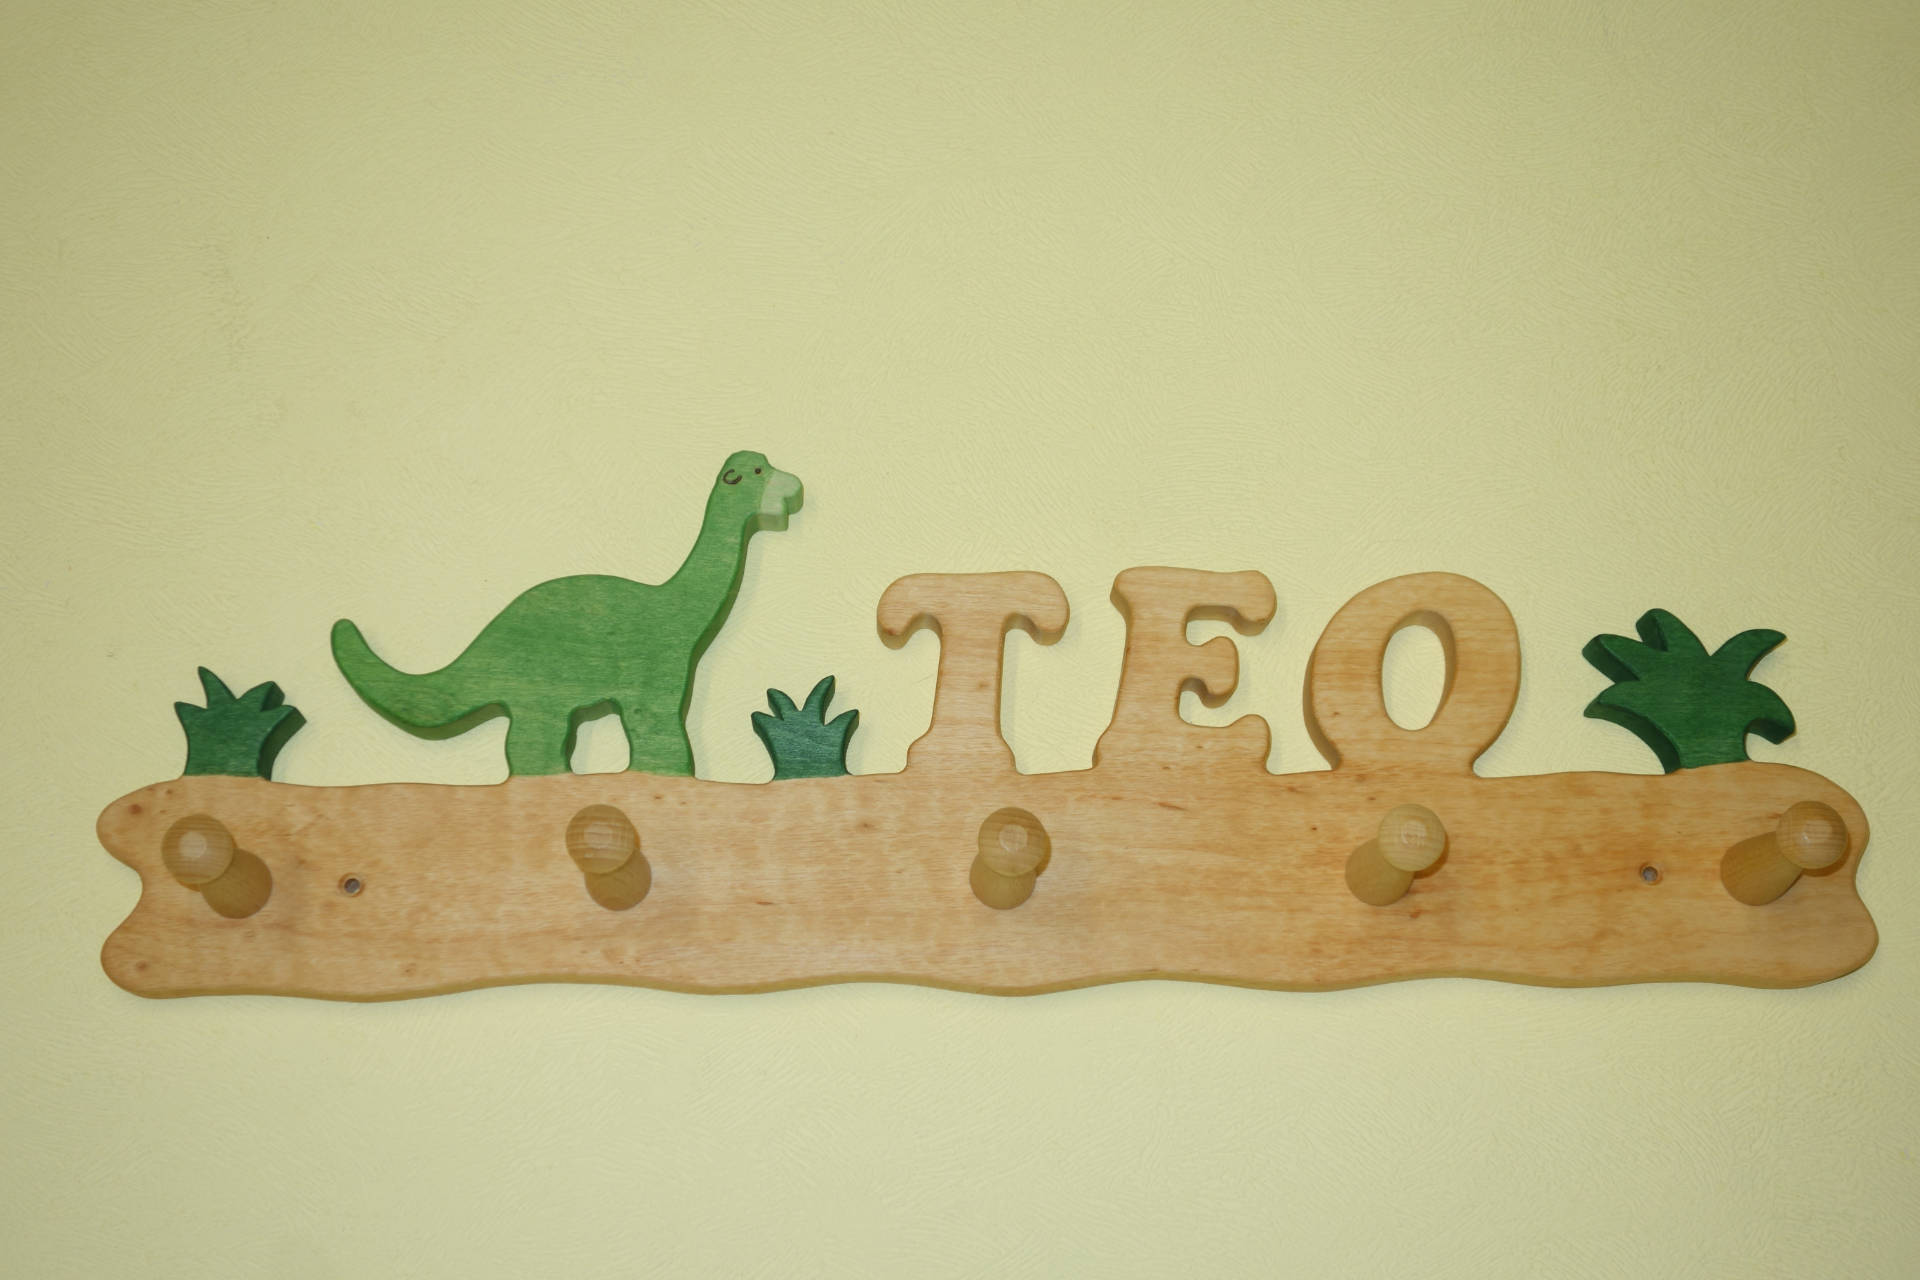 Kindergarderobe mit Name Teo und Dino